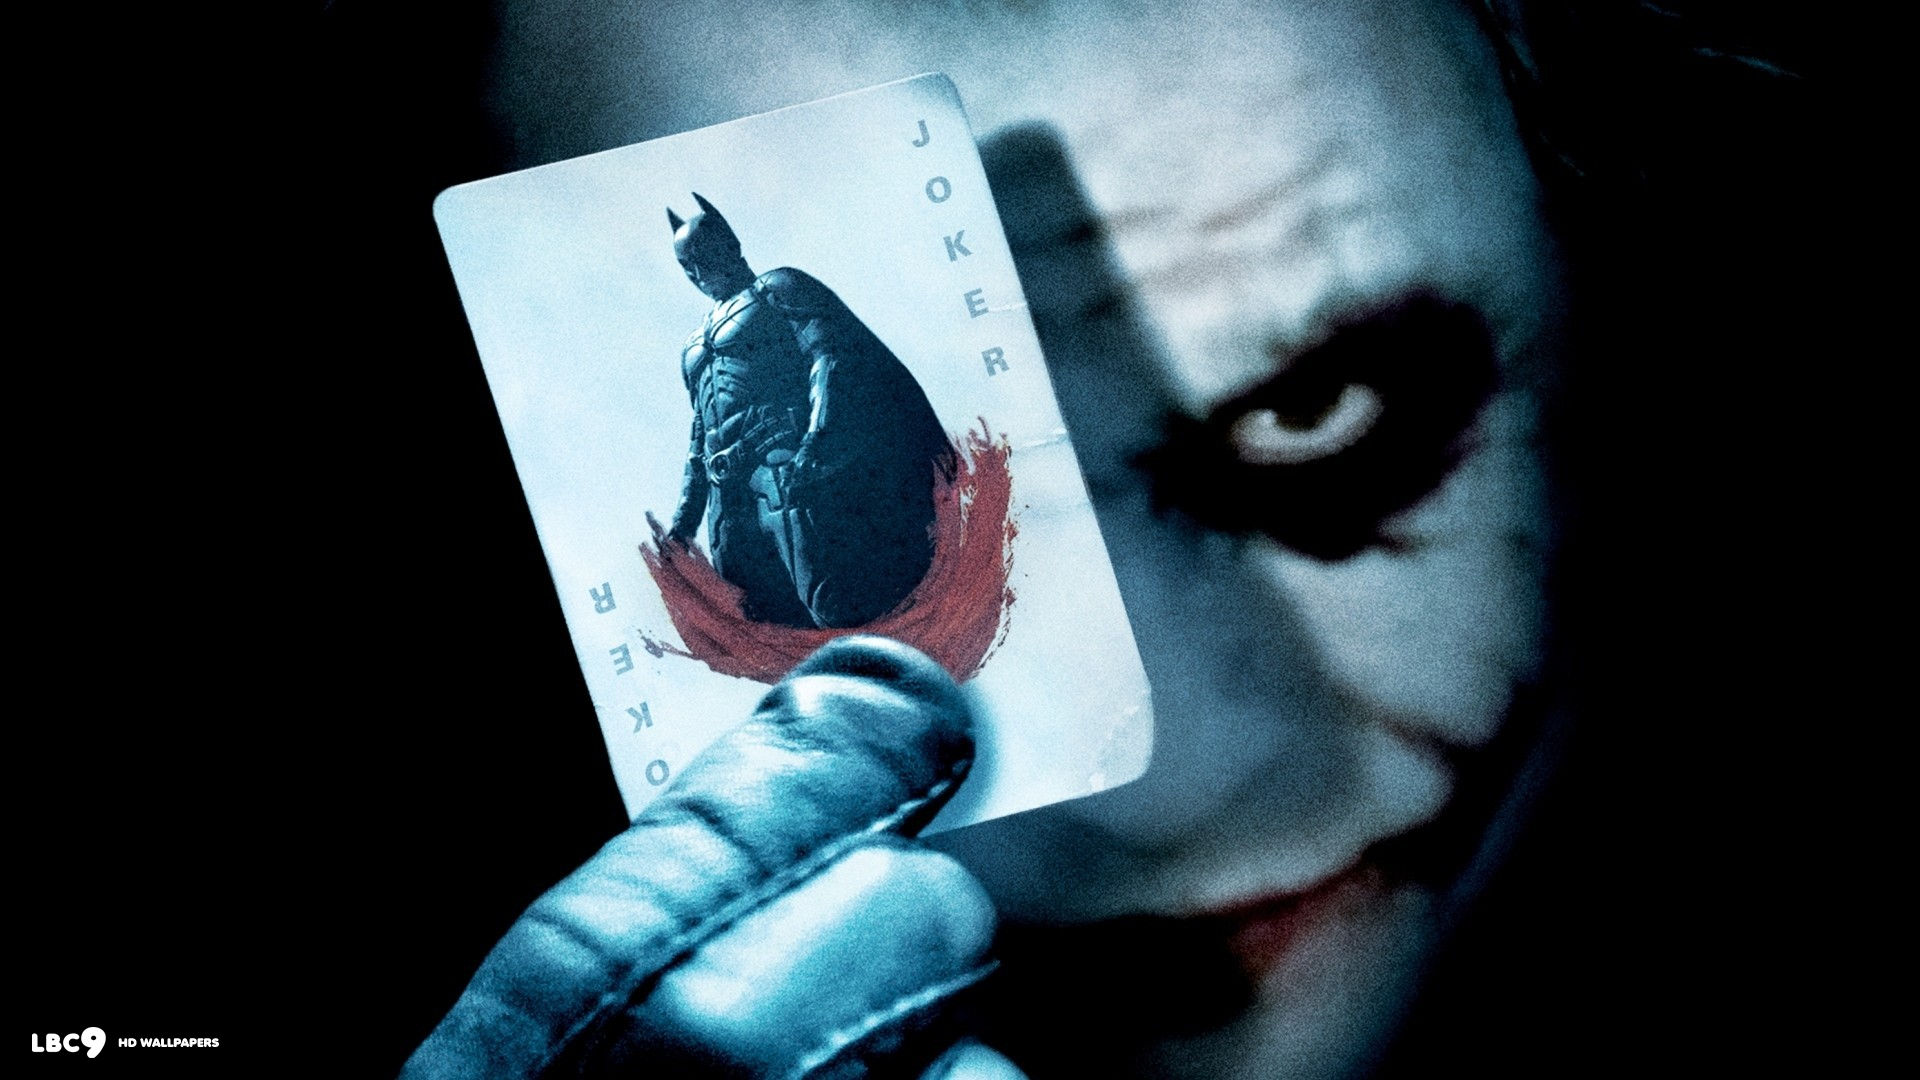 Joker Dark Knight Wallpaper Images amp Pictures   Becuo